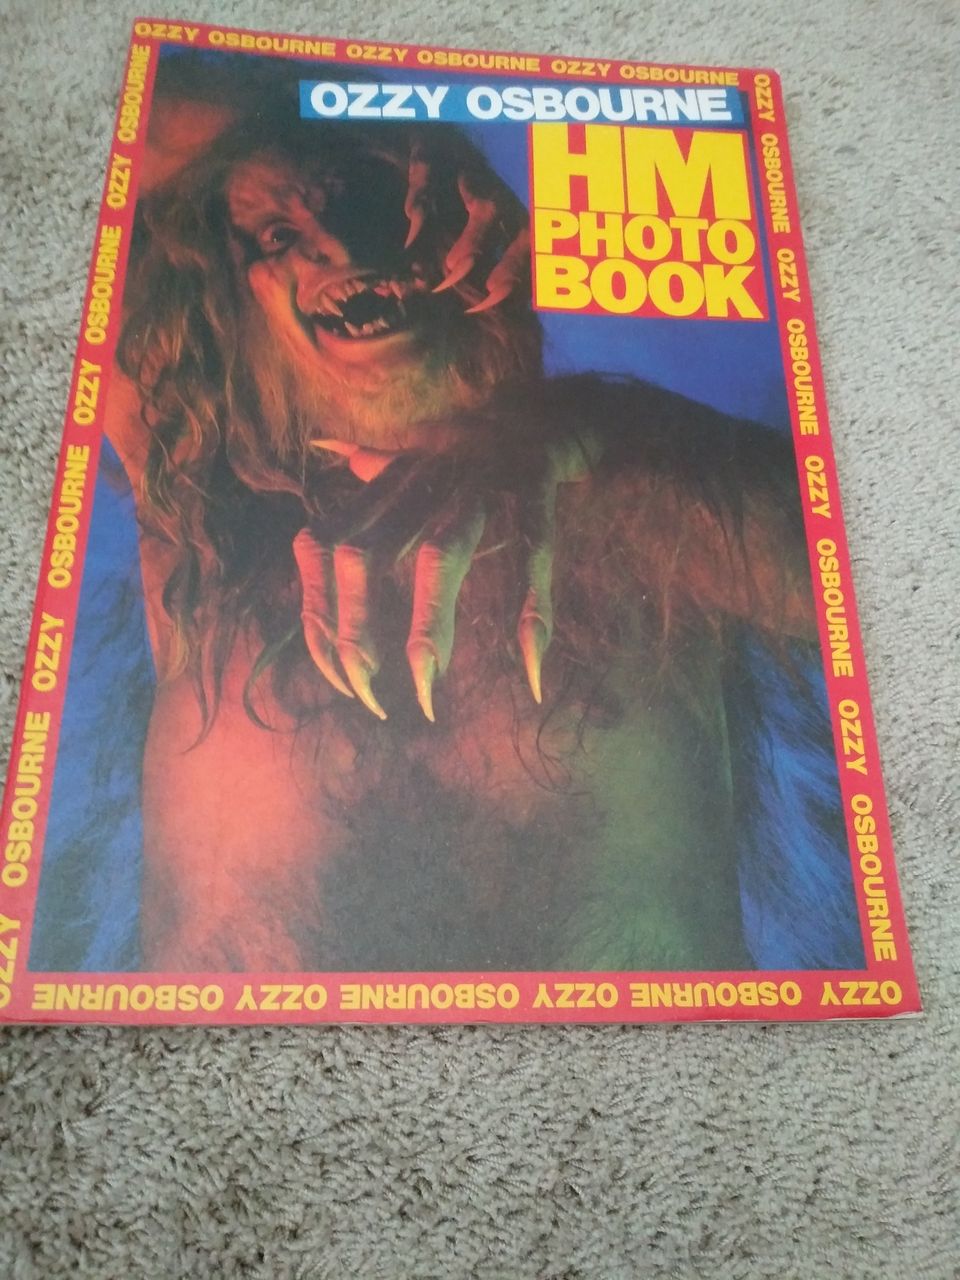 Ozzy Osbourne- HM Photo Book, 1983.